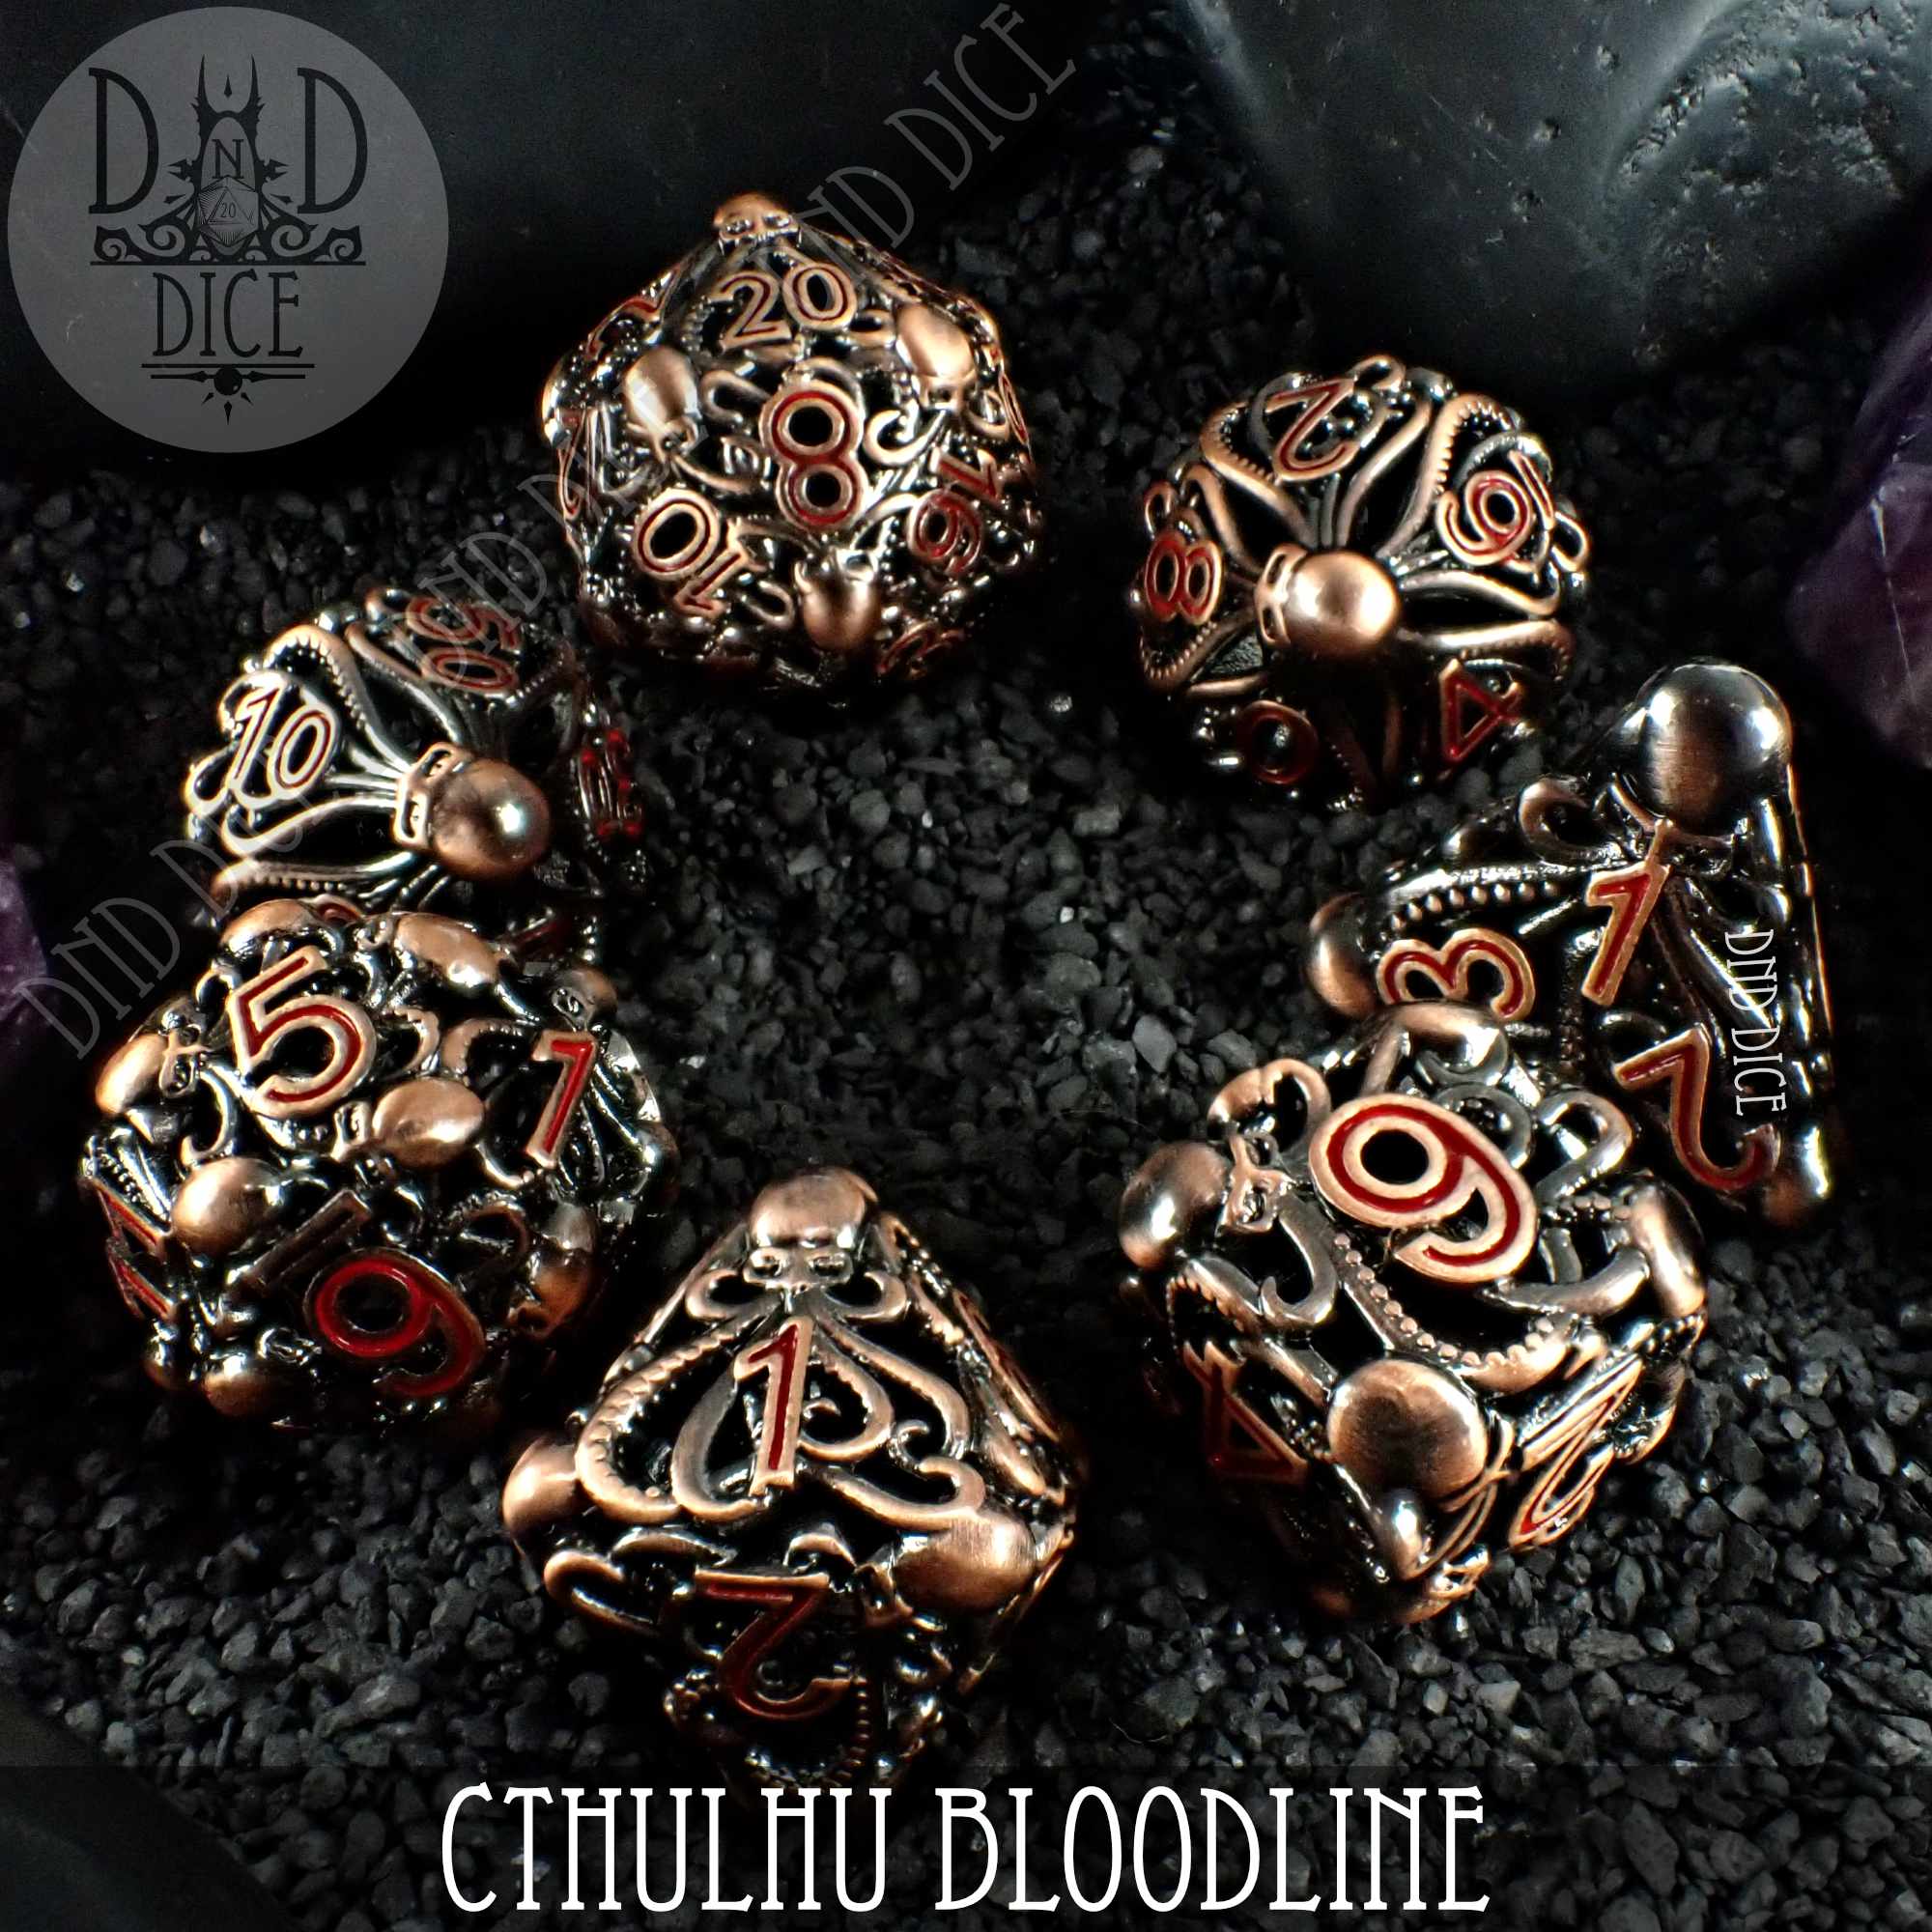 Cthulhu Bloodline Hollow Metal Dice Set (Gift Box)